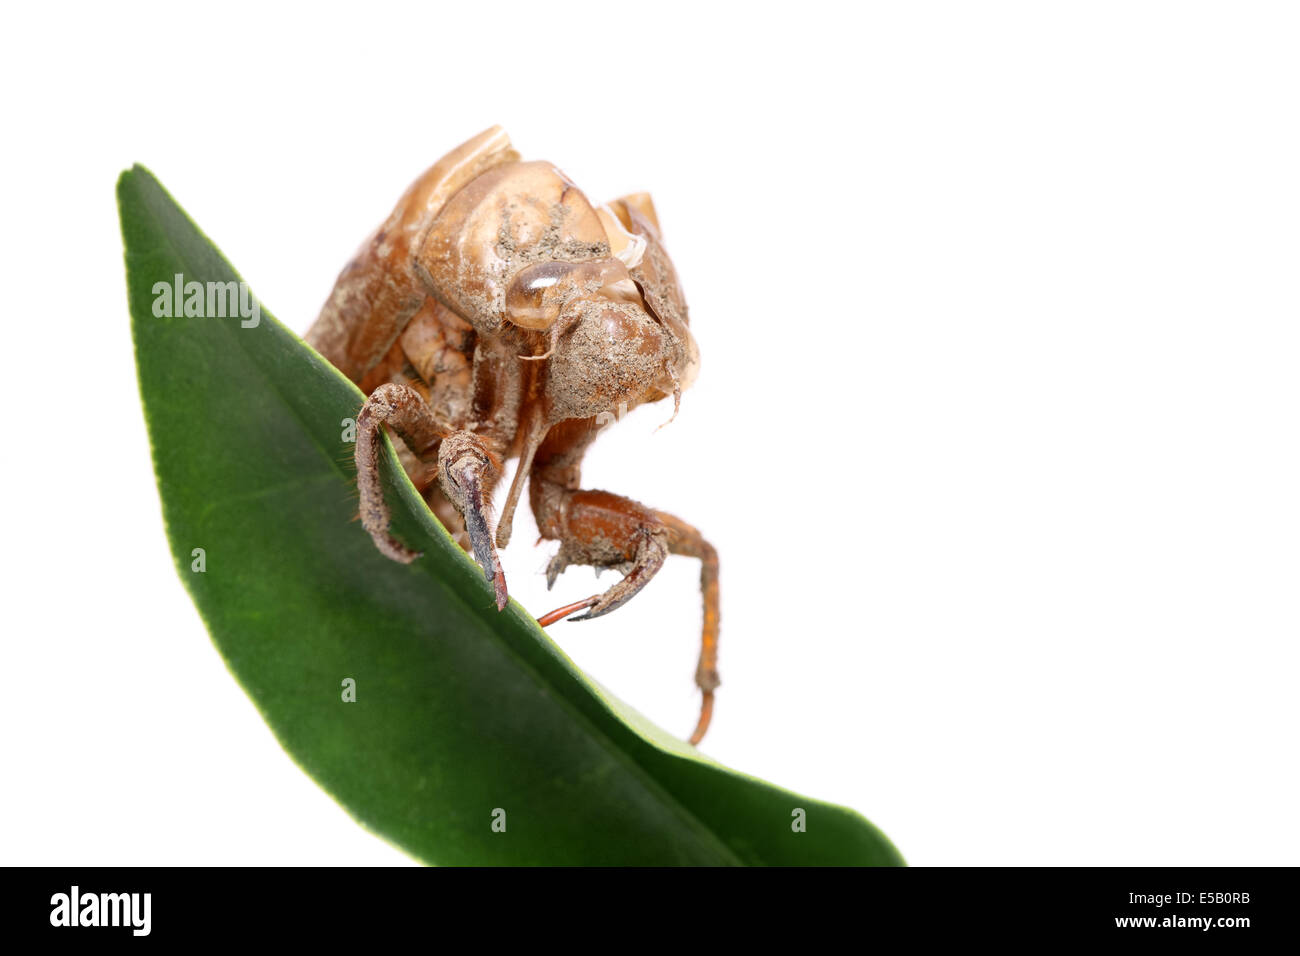 close up of cicada slough on white background Stock Photo